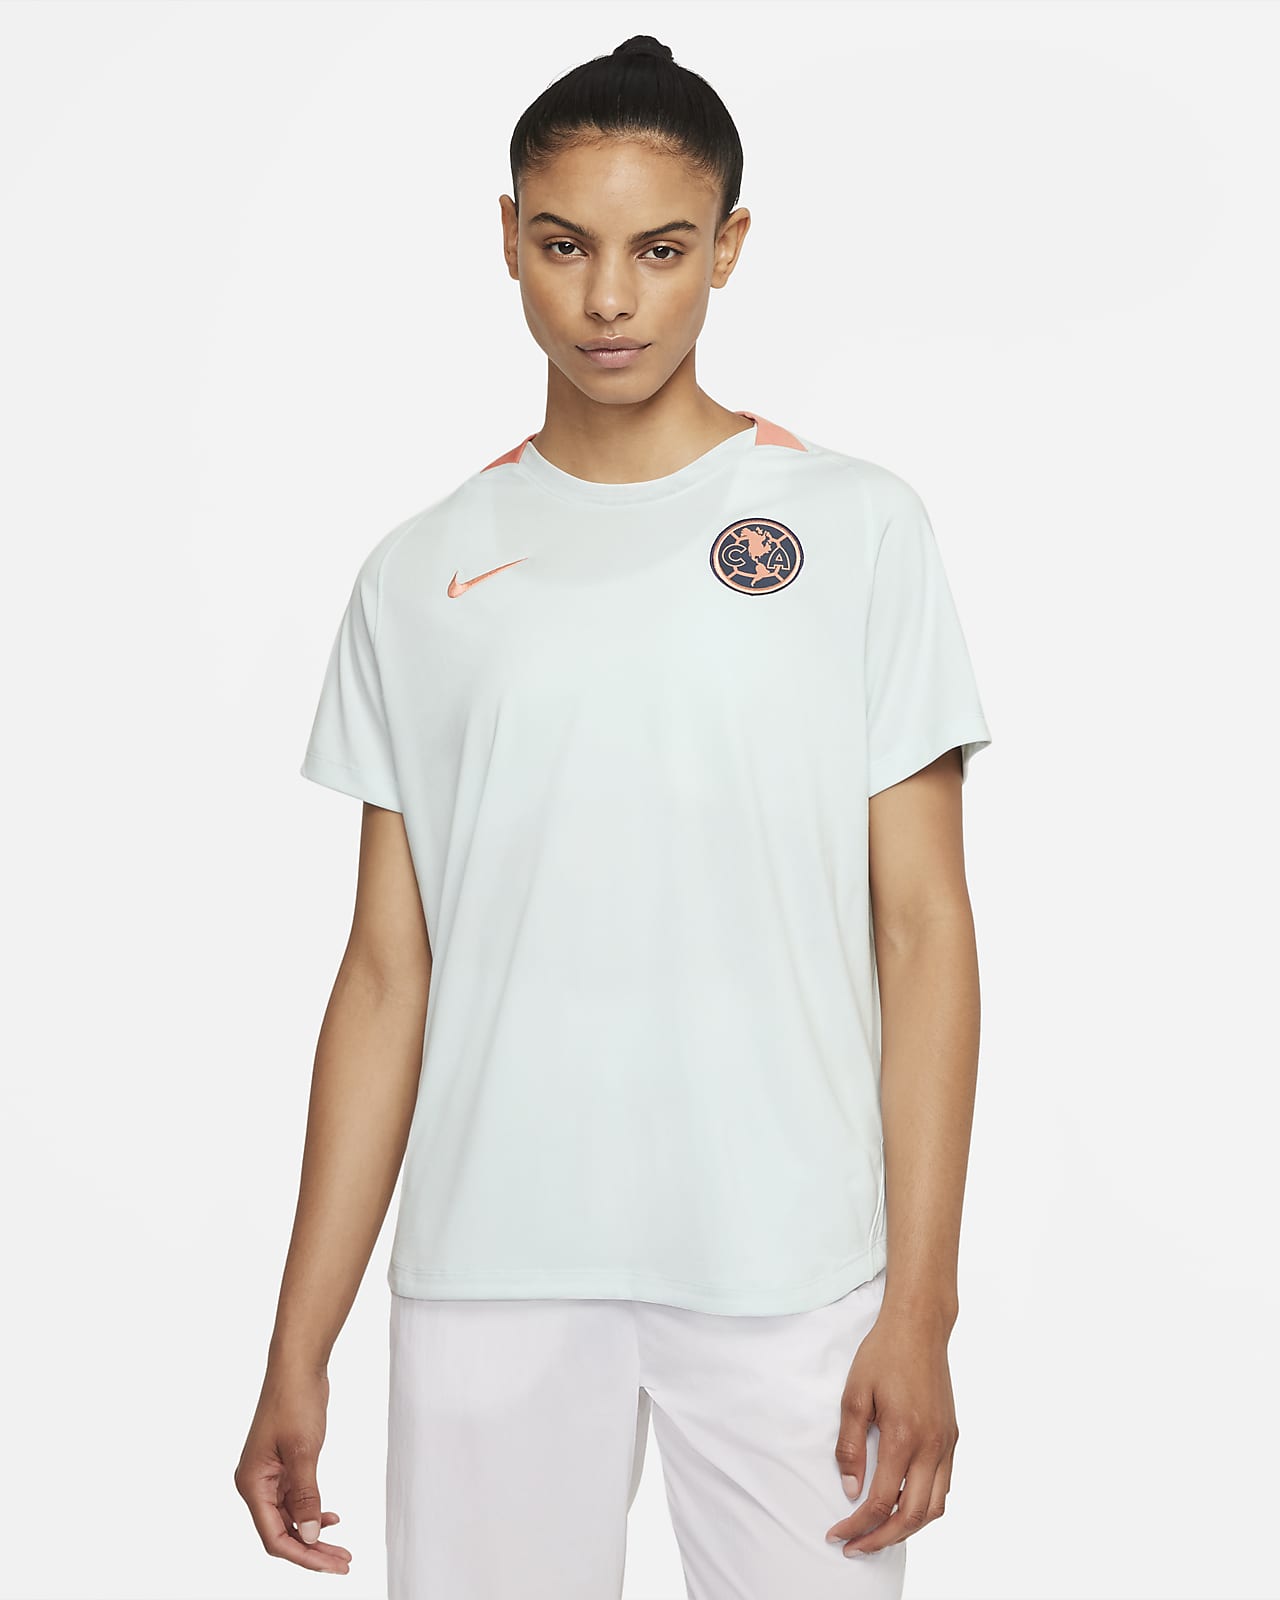 Club América Women's Nike Short-Sleeve Soccer Top. 